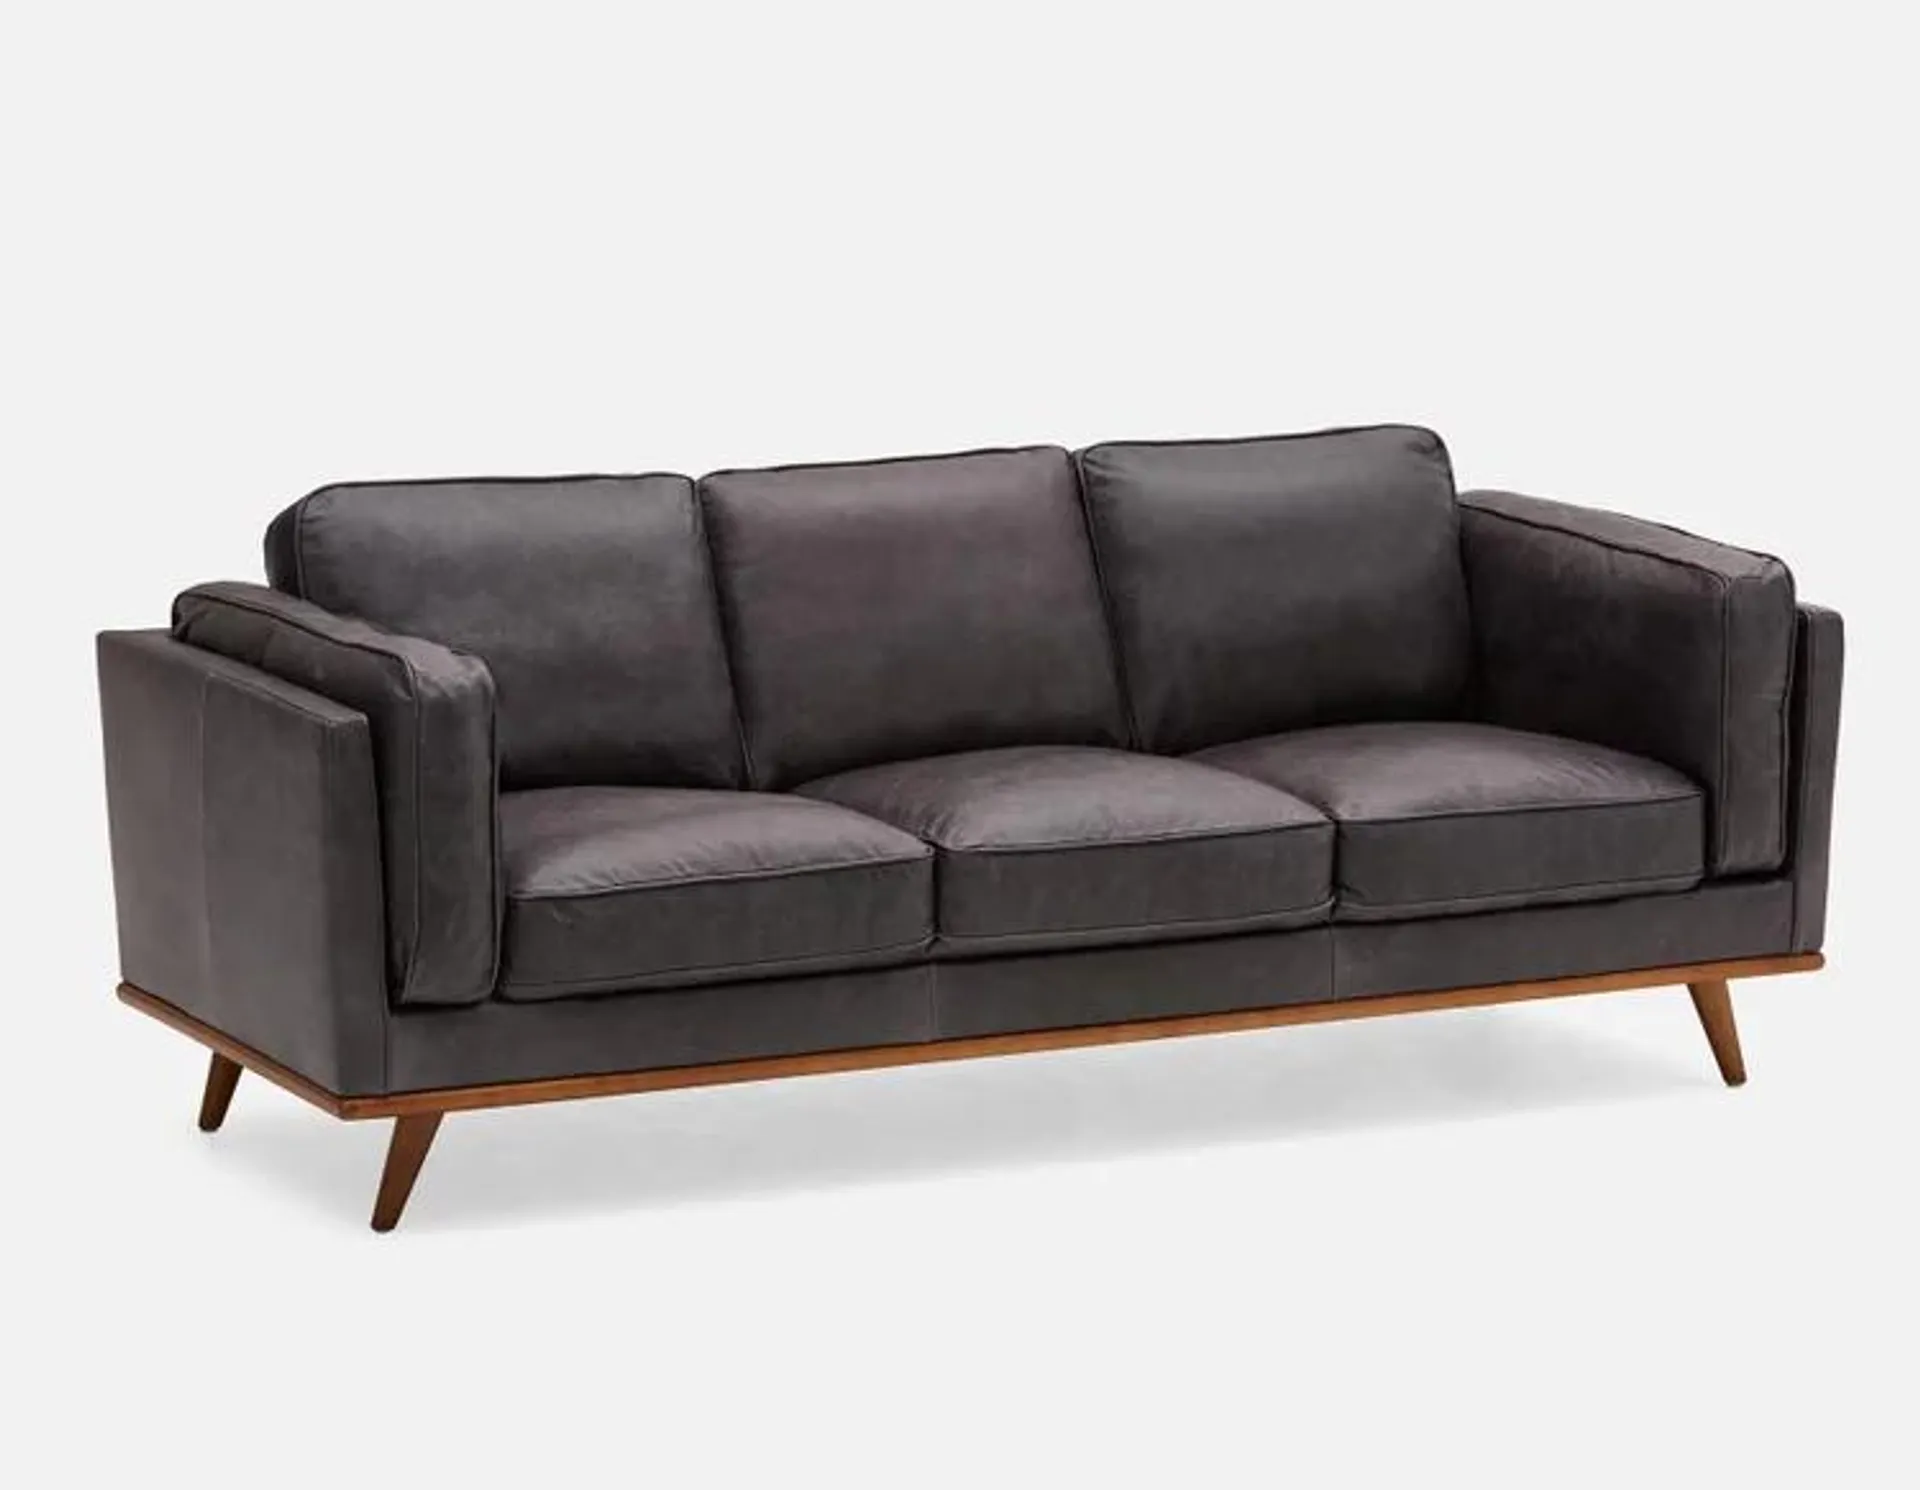 ROWAN 100% leather 3-seater Sofa